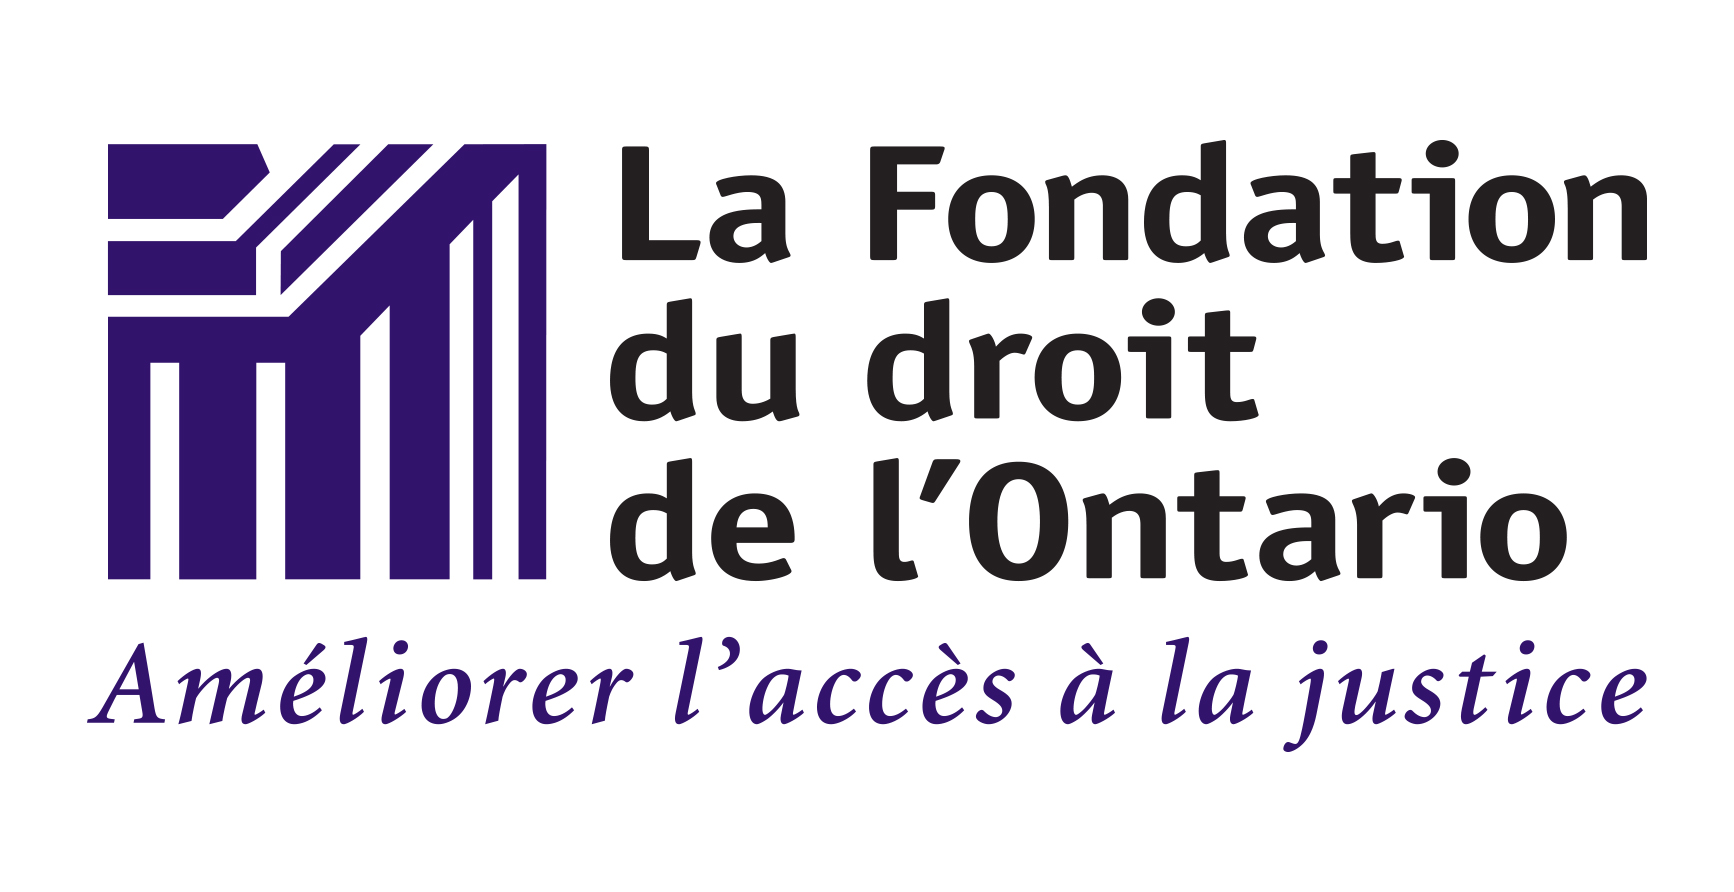 Law Foundation of Ontario - FR logo